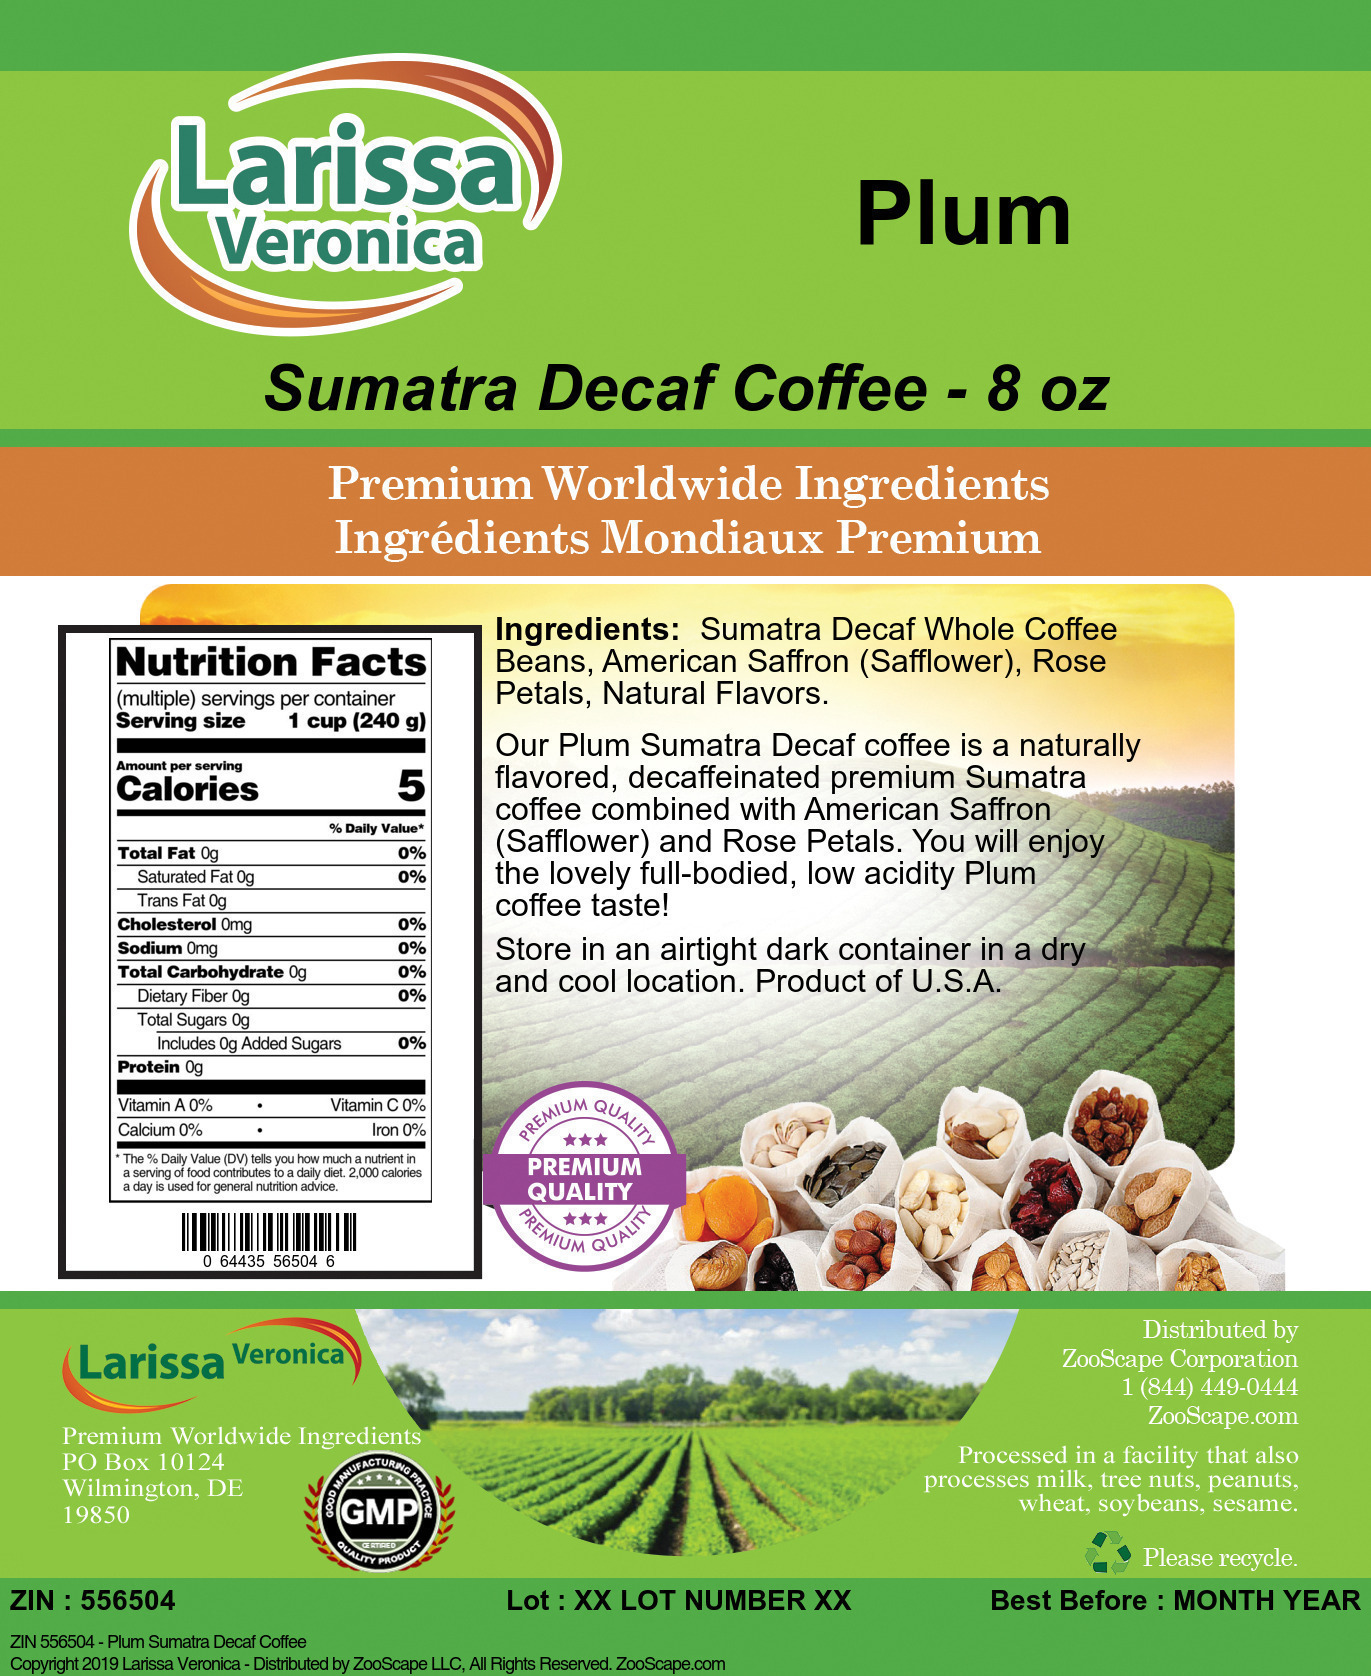 Plum Sumatra Decaf Coffee - Label